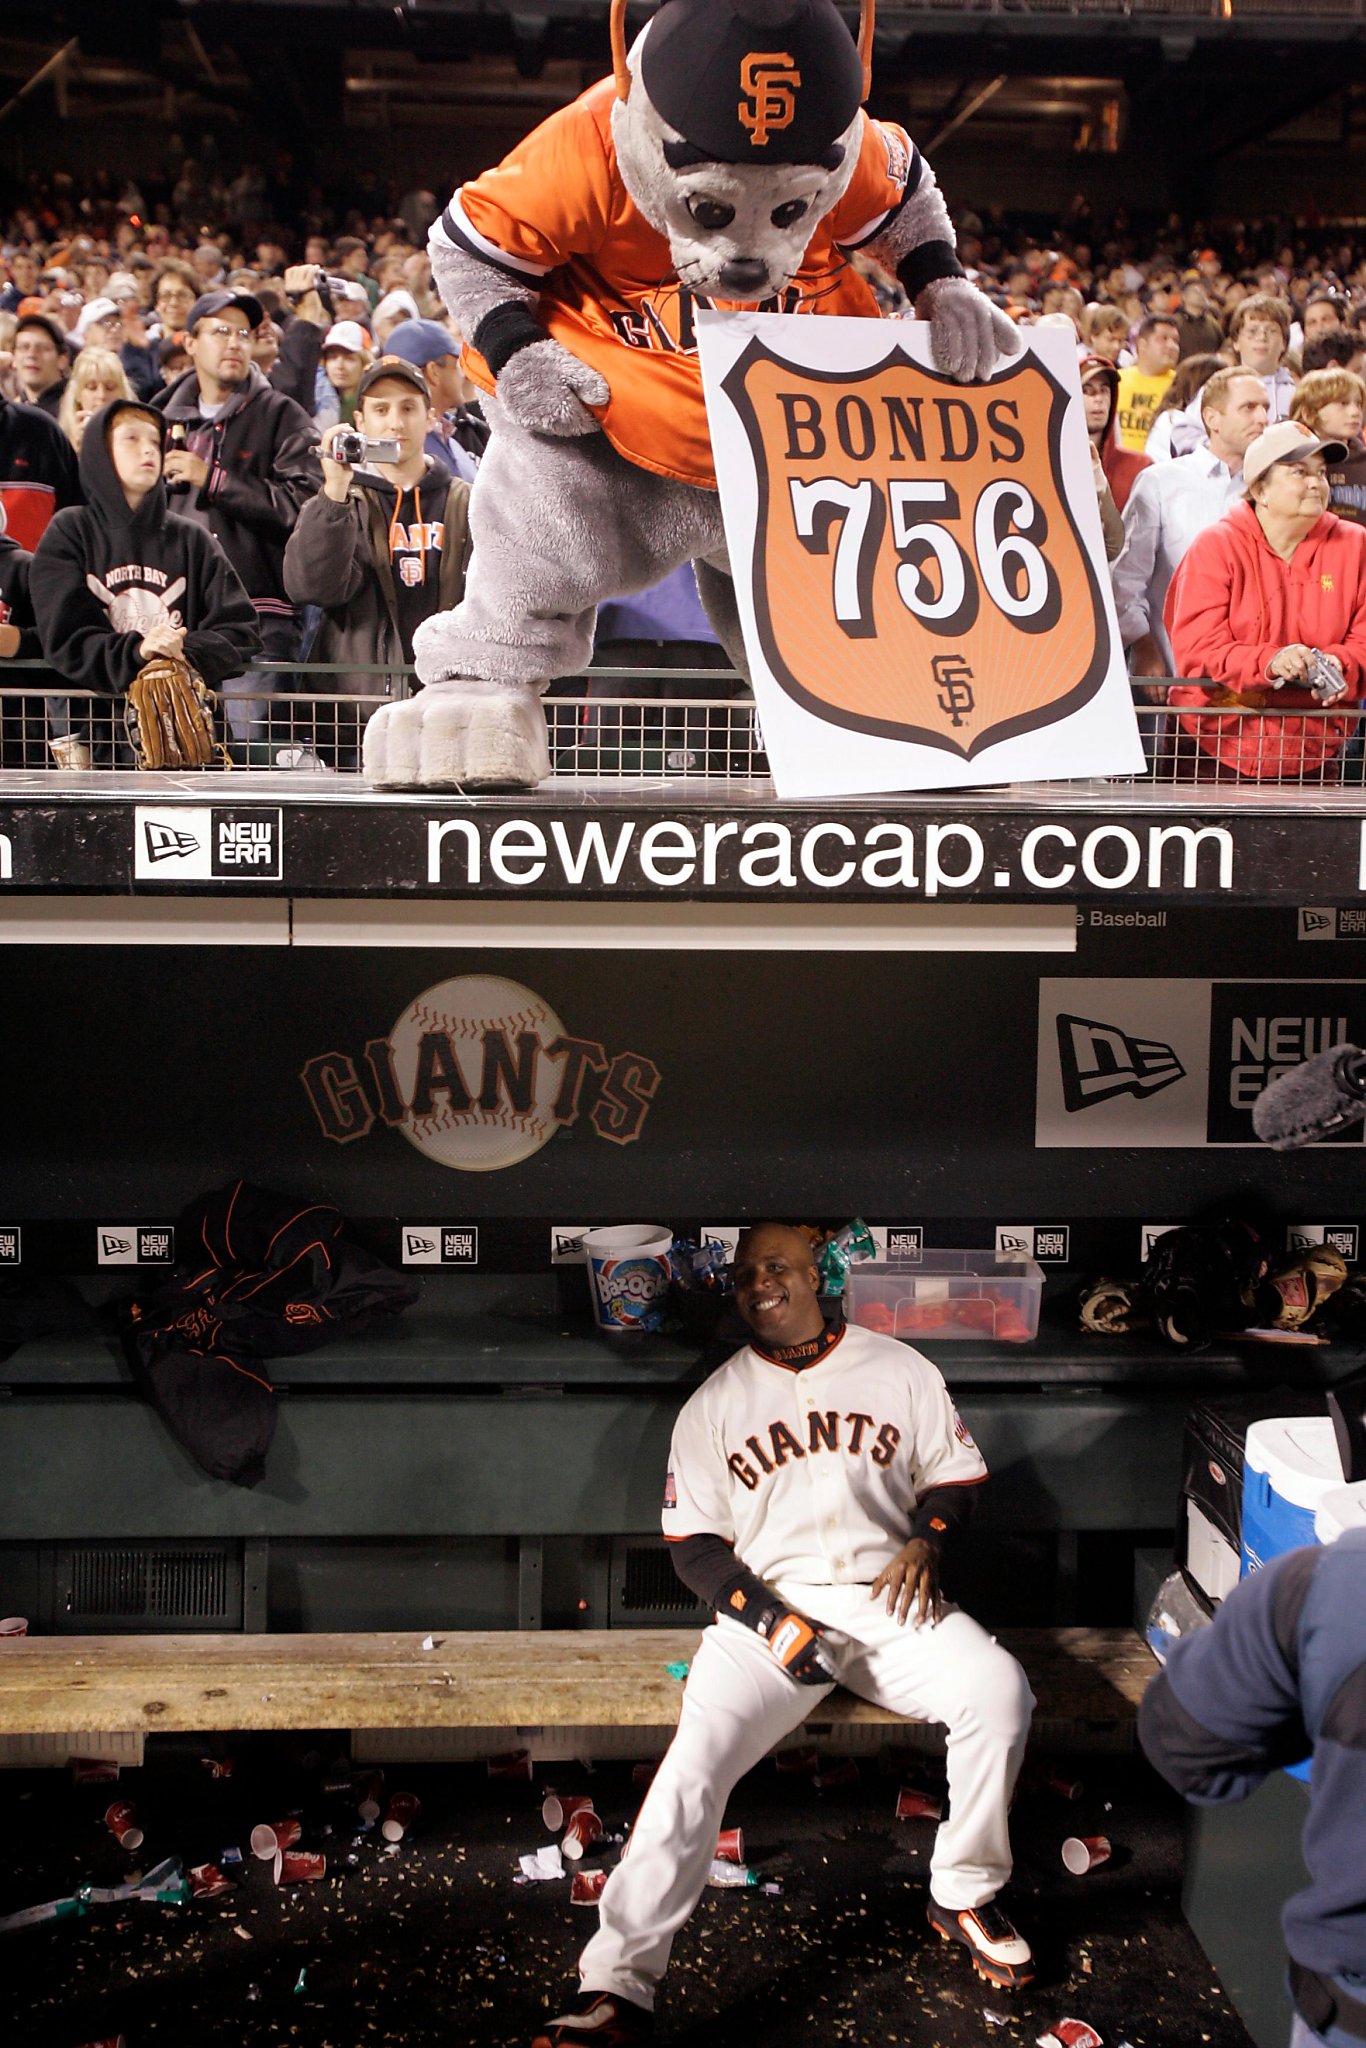 San Francisco Giants will retire Barry Bonds' No. 25 jersey in August